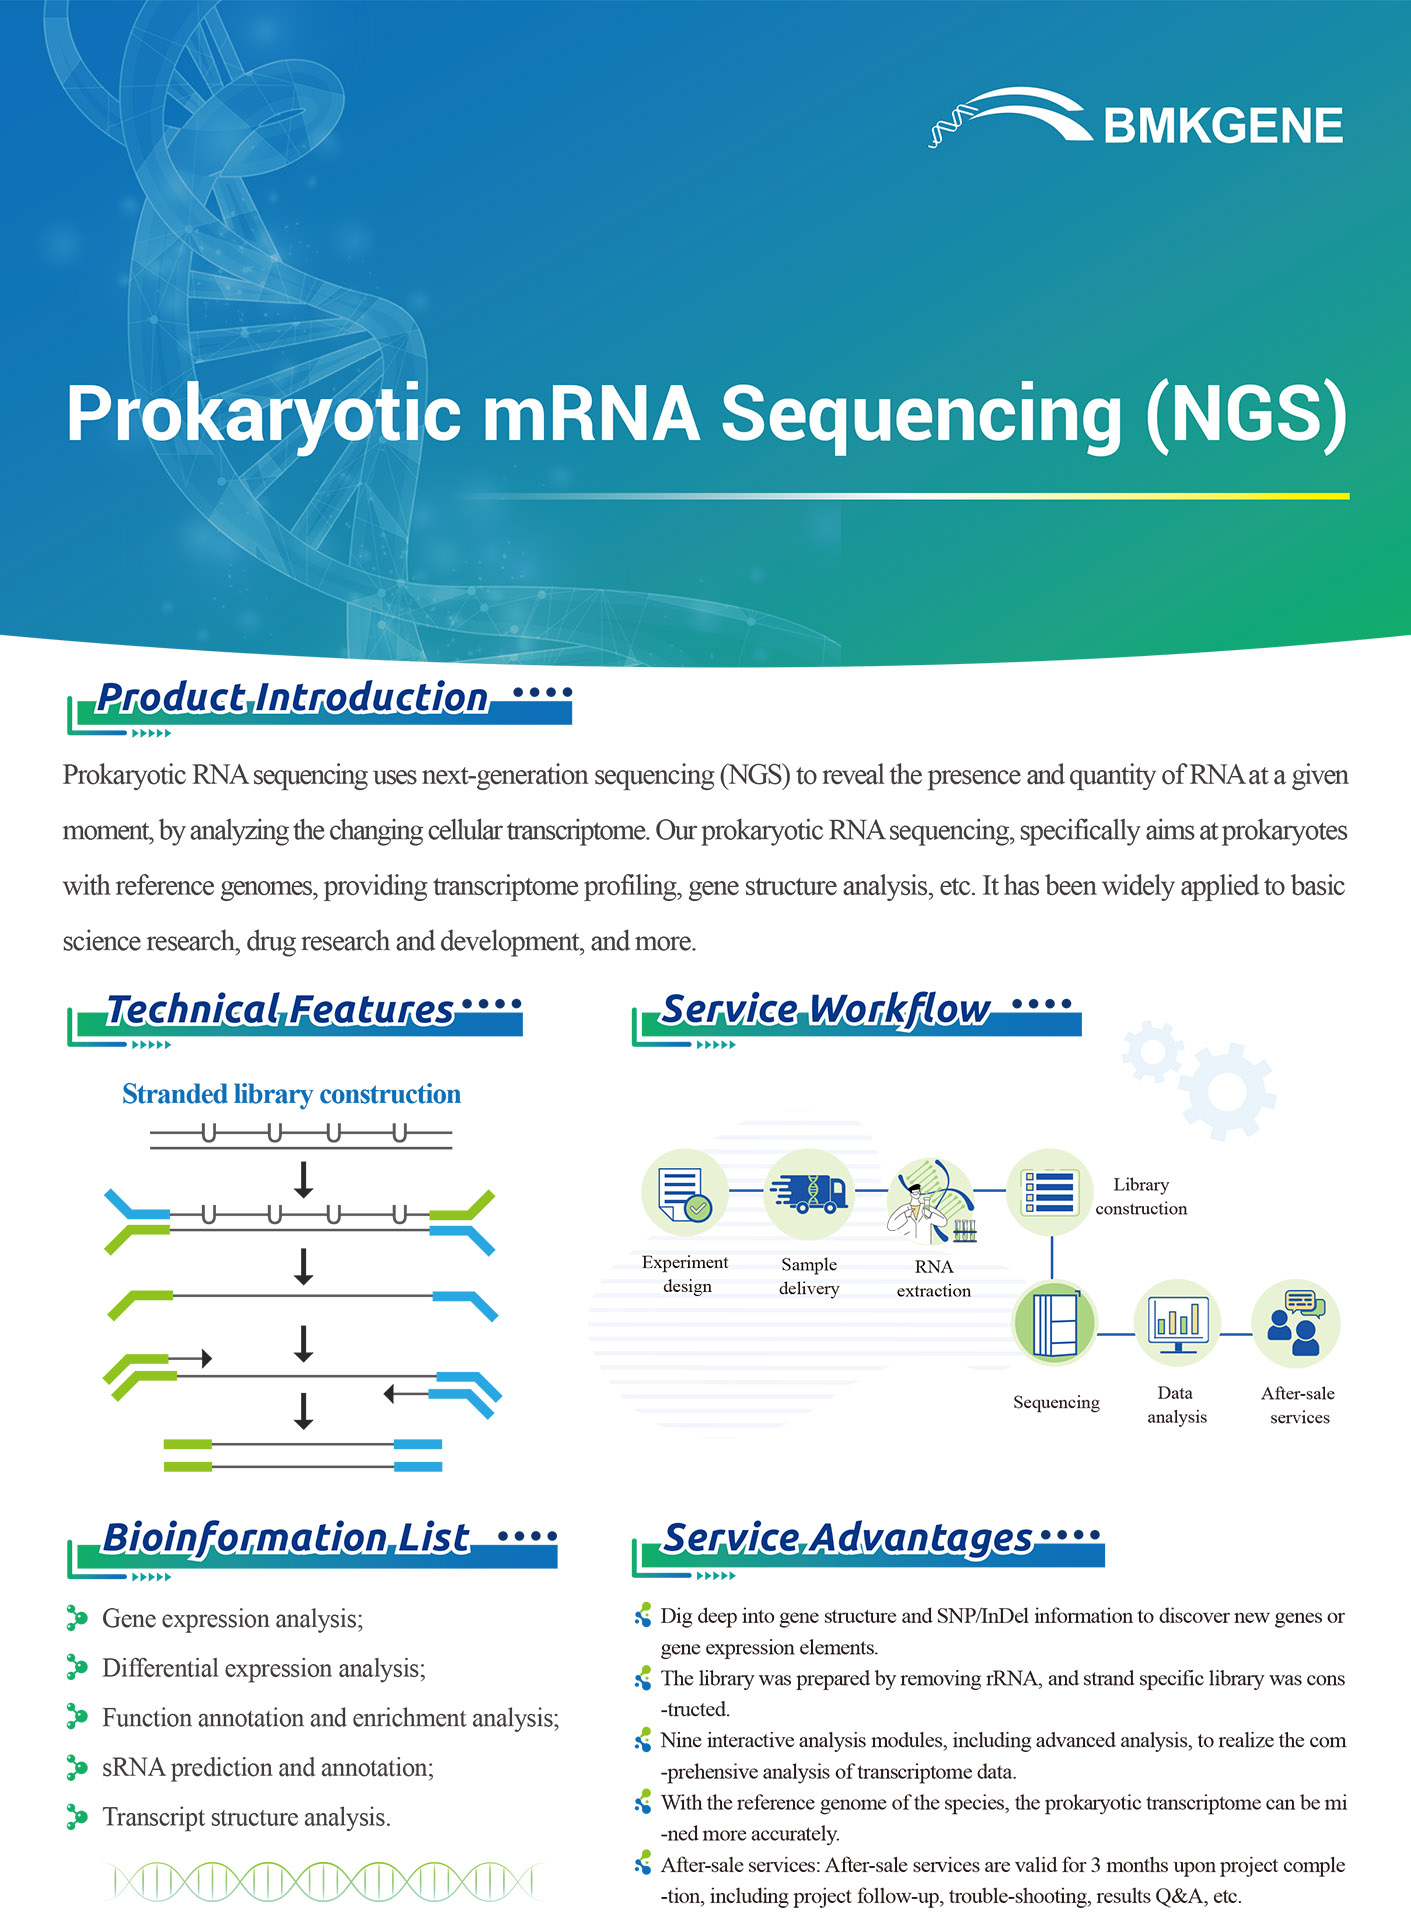 http://www.bmkgene.com/uploads/Prokaryotic-mRNA-Sequencing-NGS-BMKGENE-2023.121.pdf